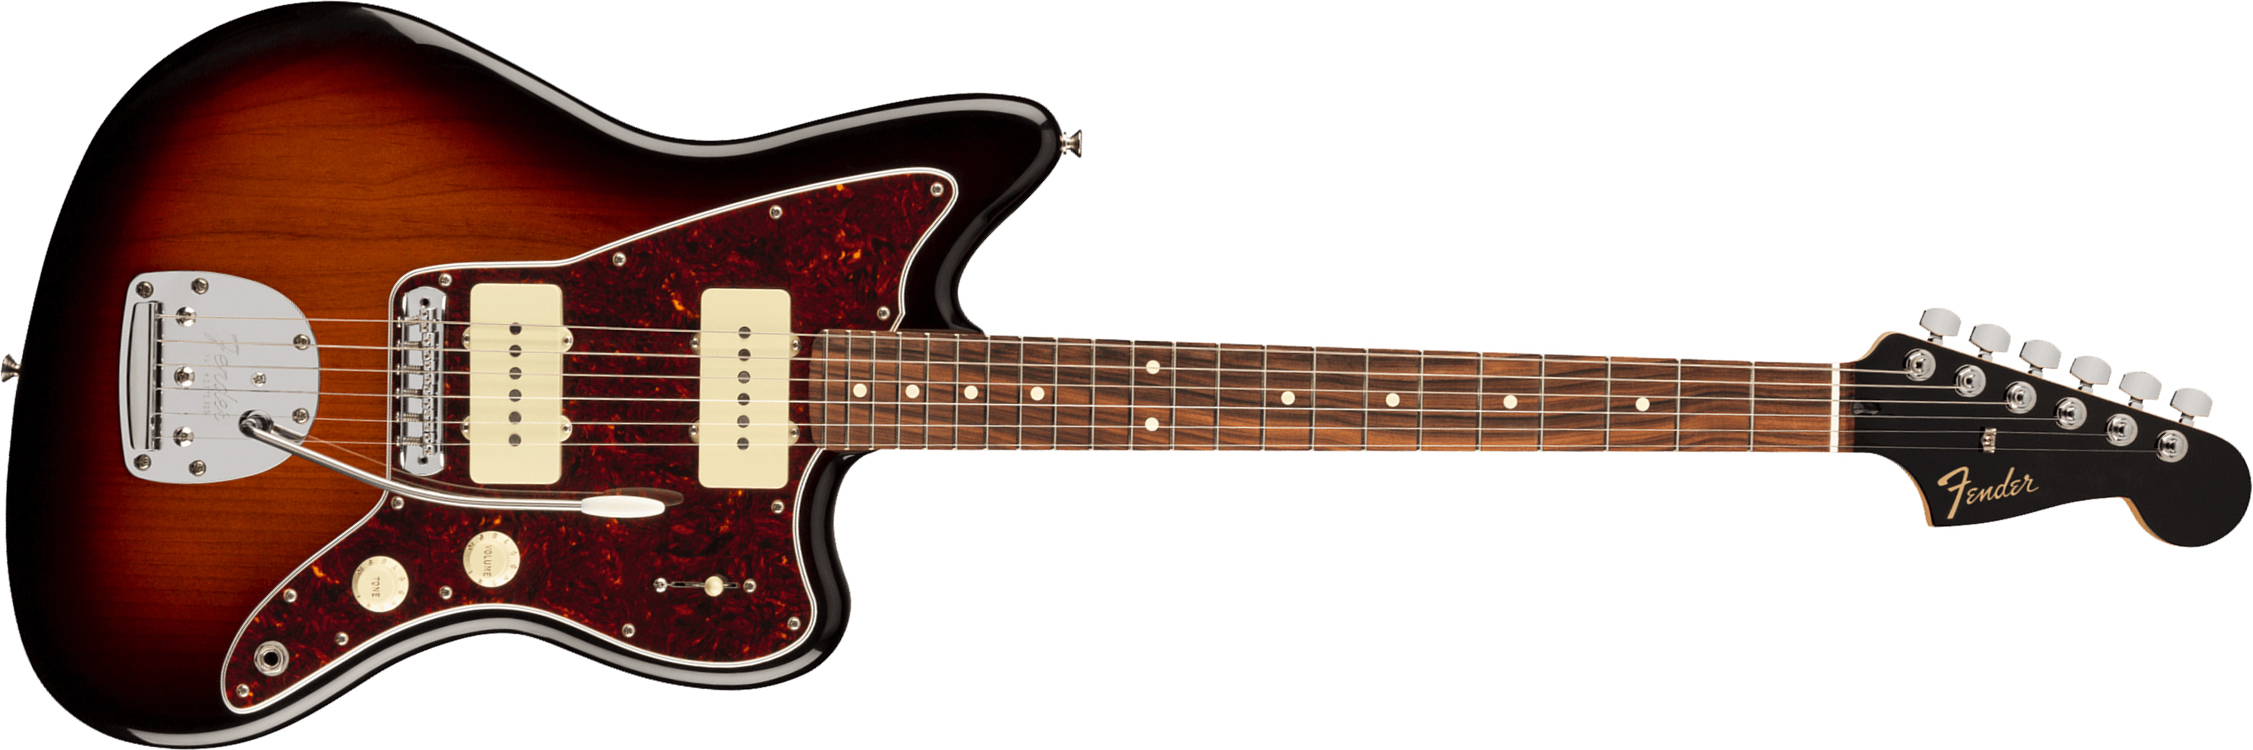 Fender Jazzmaster Player Ltd 2s Trem Pf - 3-color Sunburst - Retro-Rock-E-Gitarre - Main picture